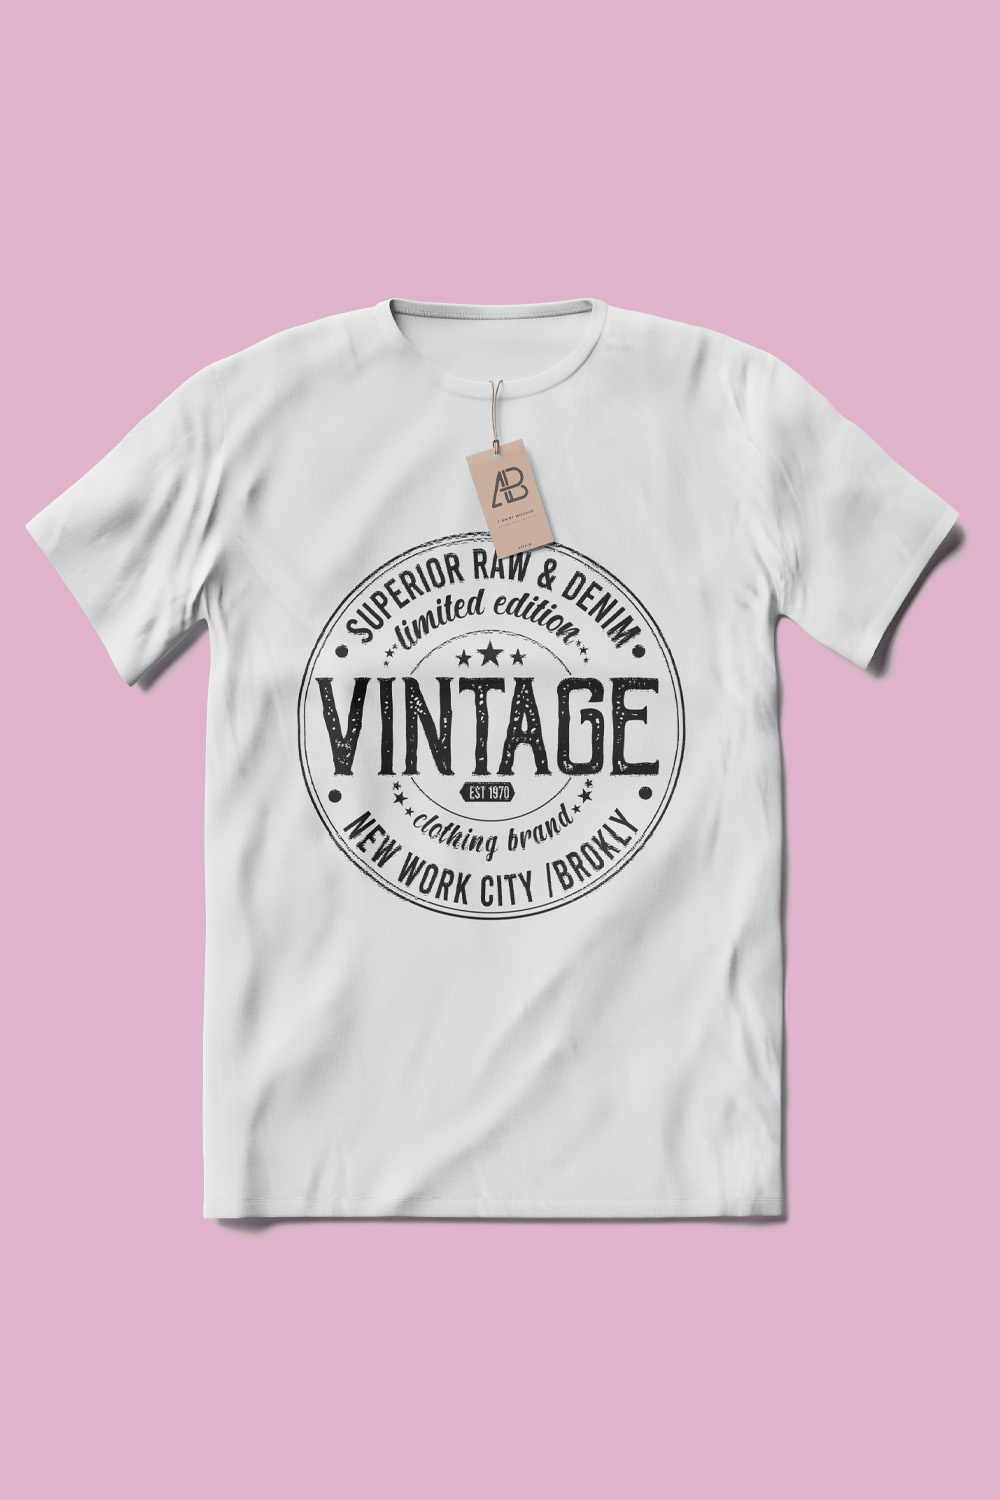 4 Vintage Car T-shirt Bundles Pinterest image.